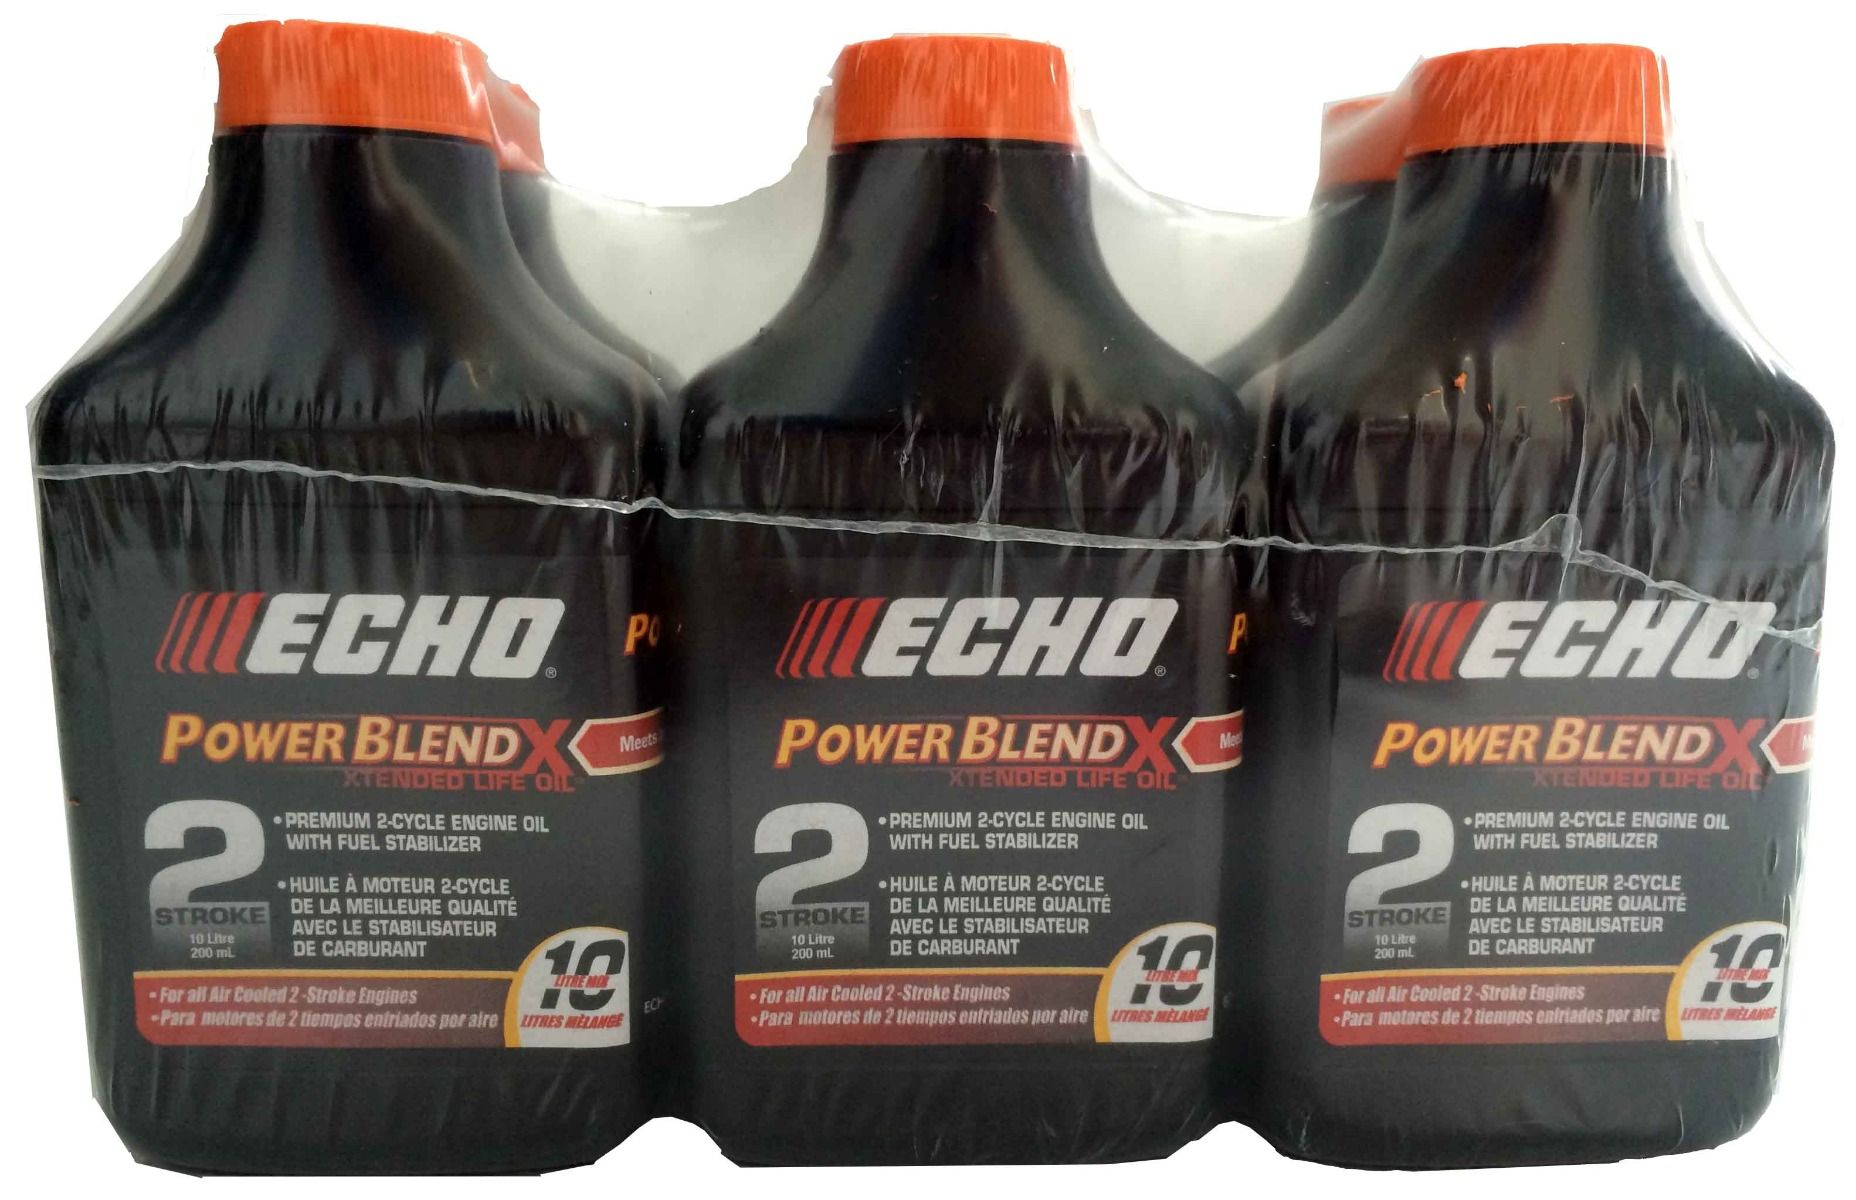 ECHO POWERBLEND PREMIUM 2 CYCLE ENGINE OIL 200ML bottles